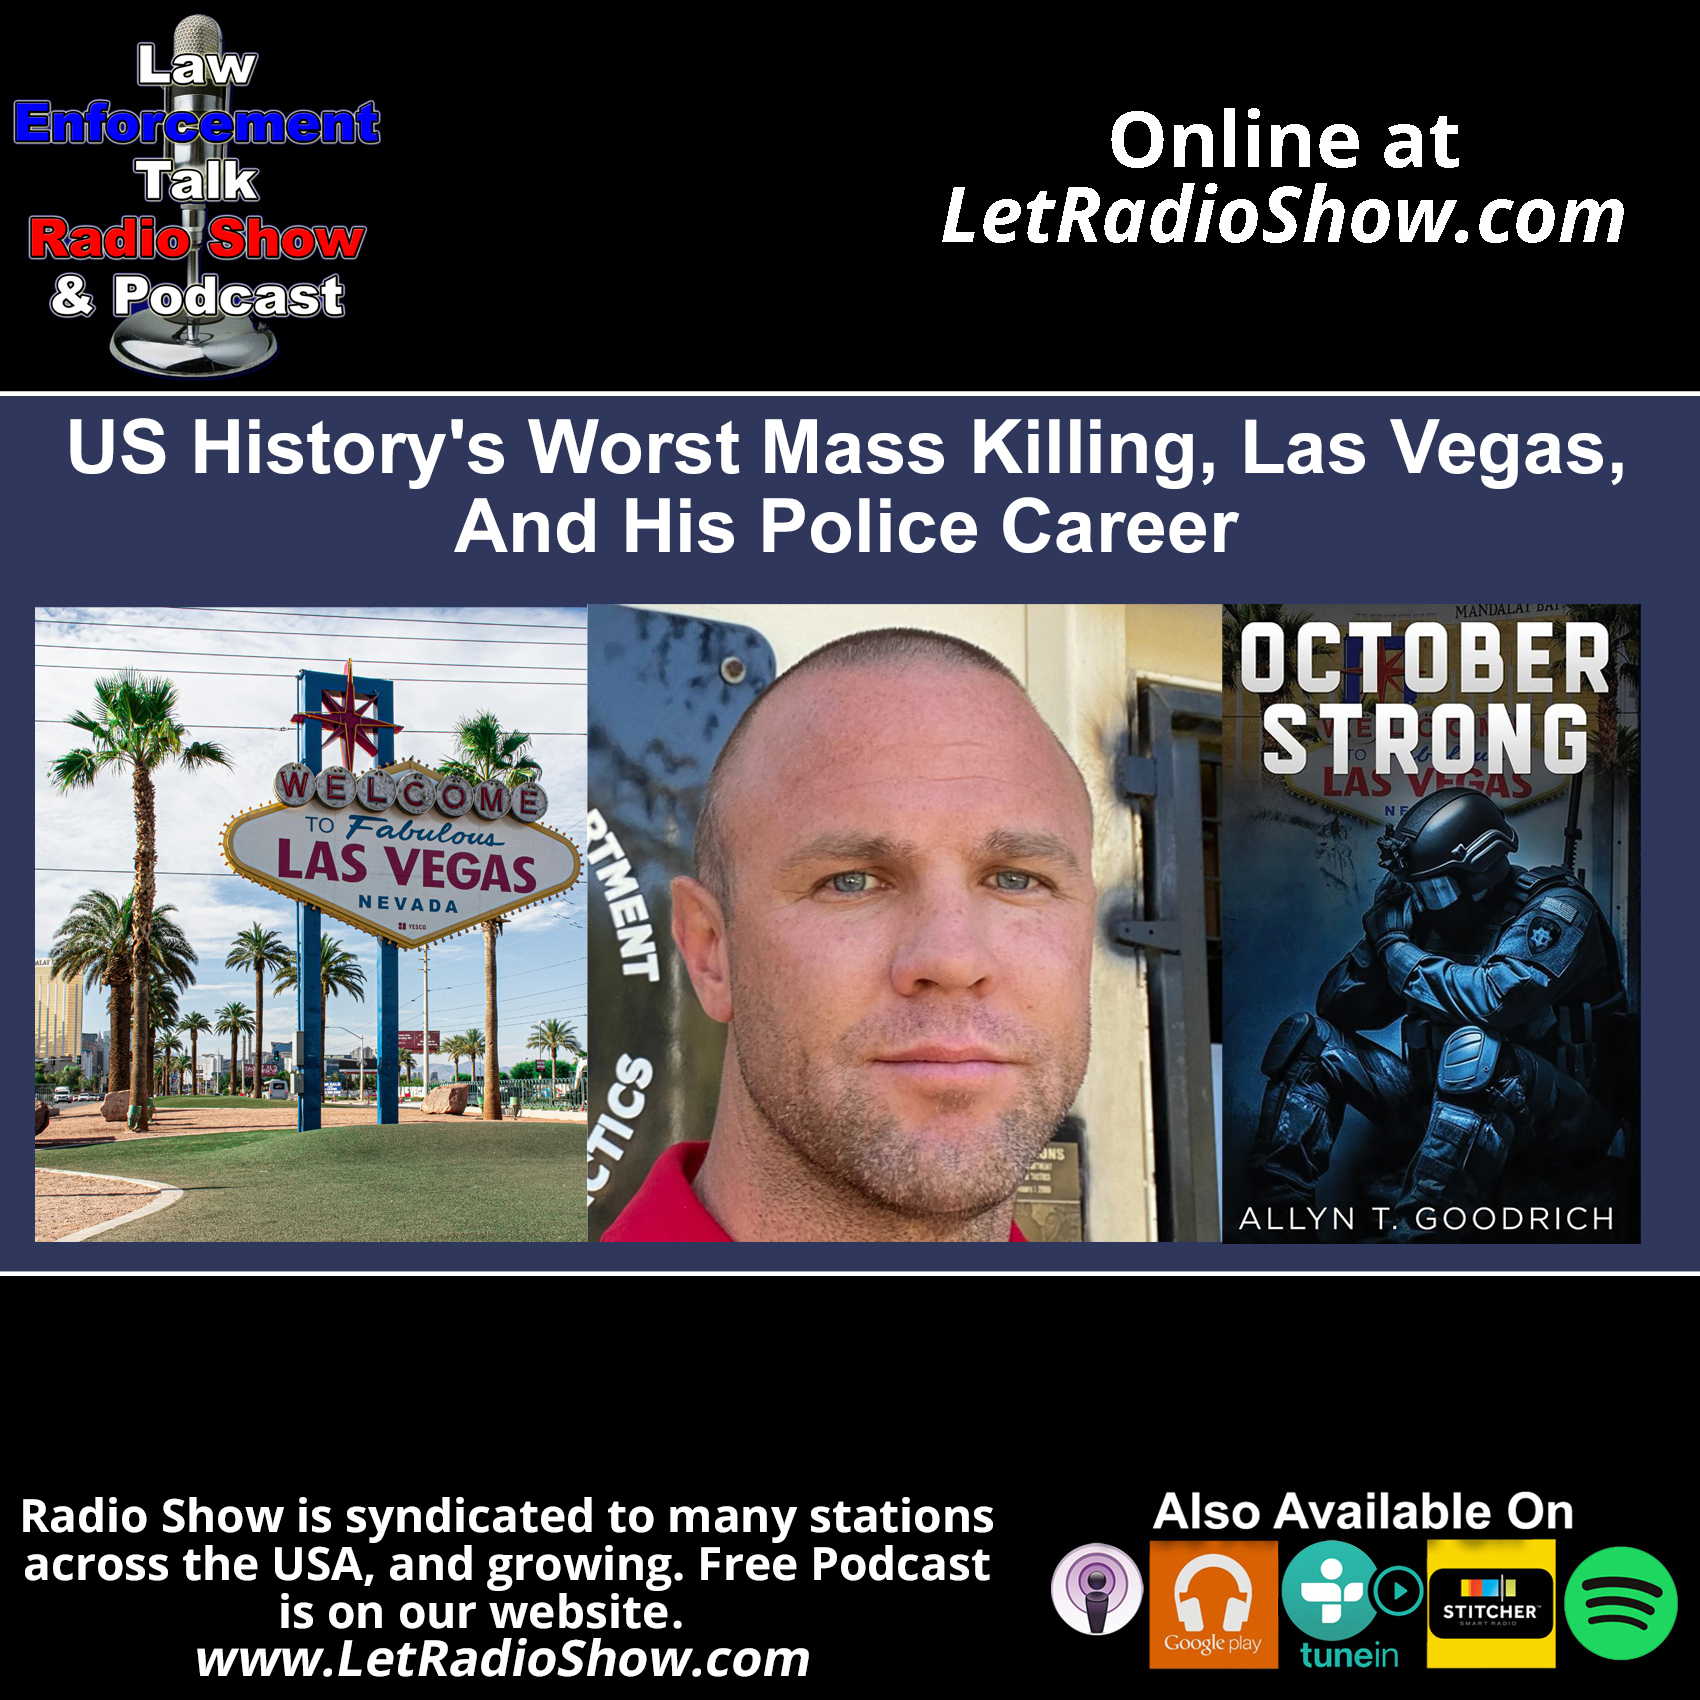 US History's Worst Mass Killing, Las Vegas, His Police Career.